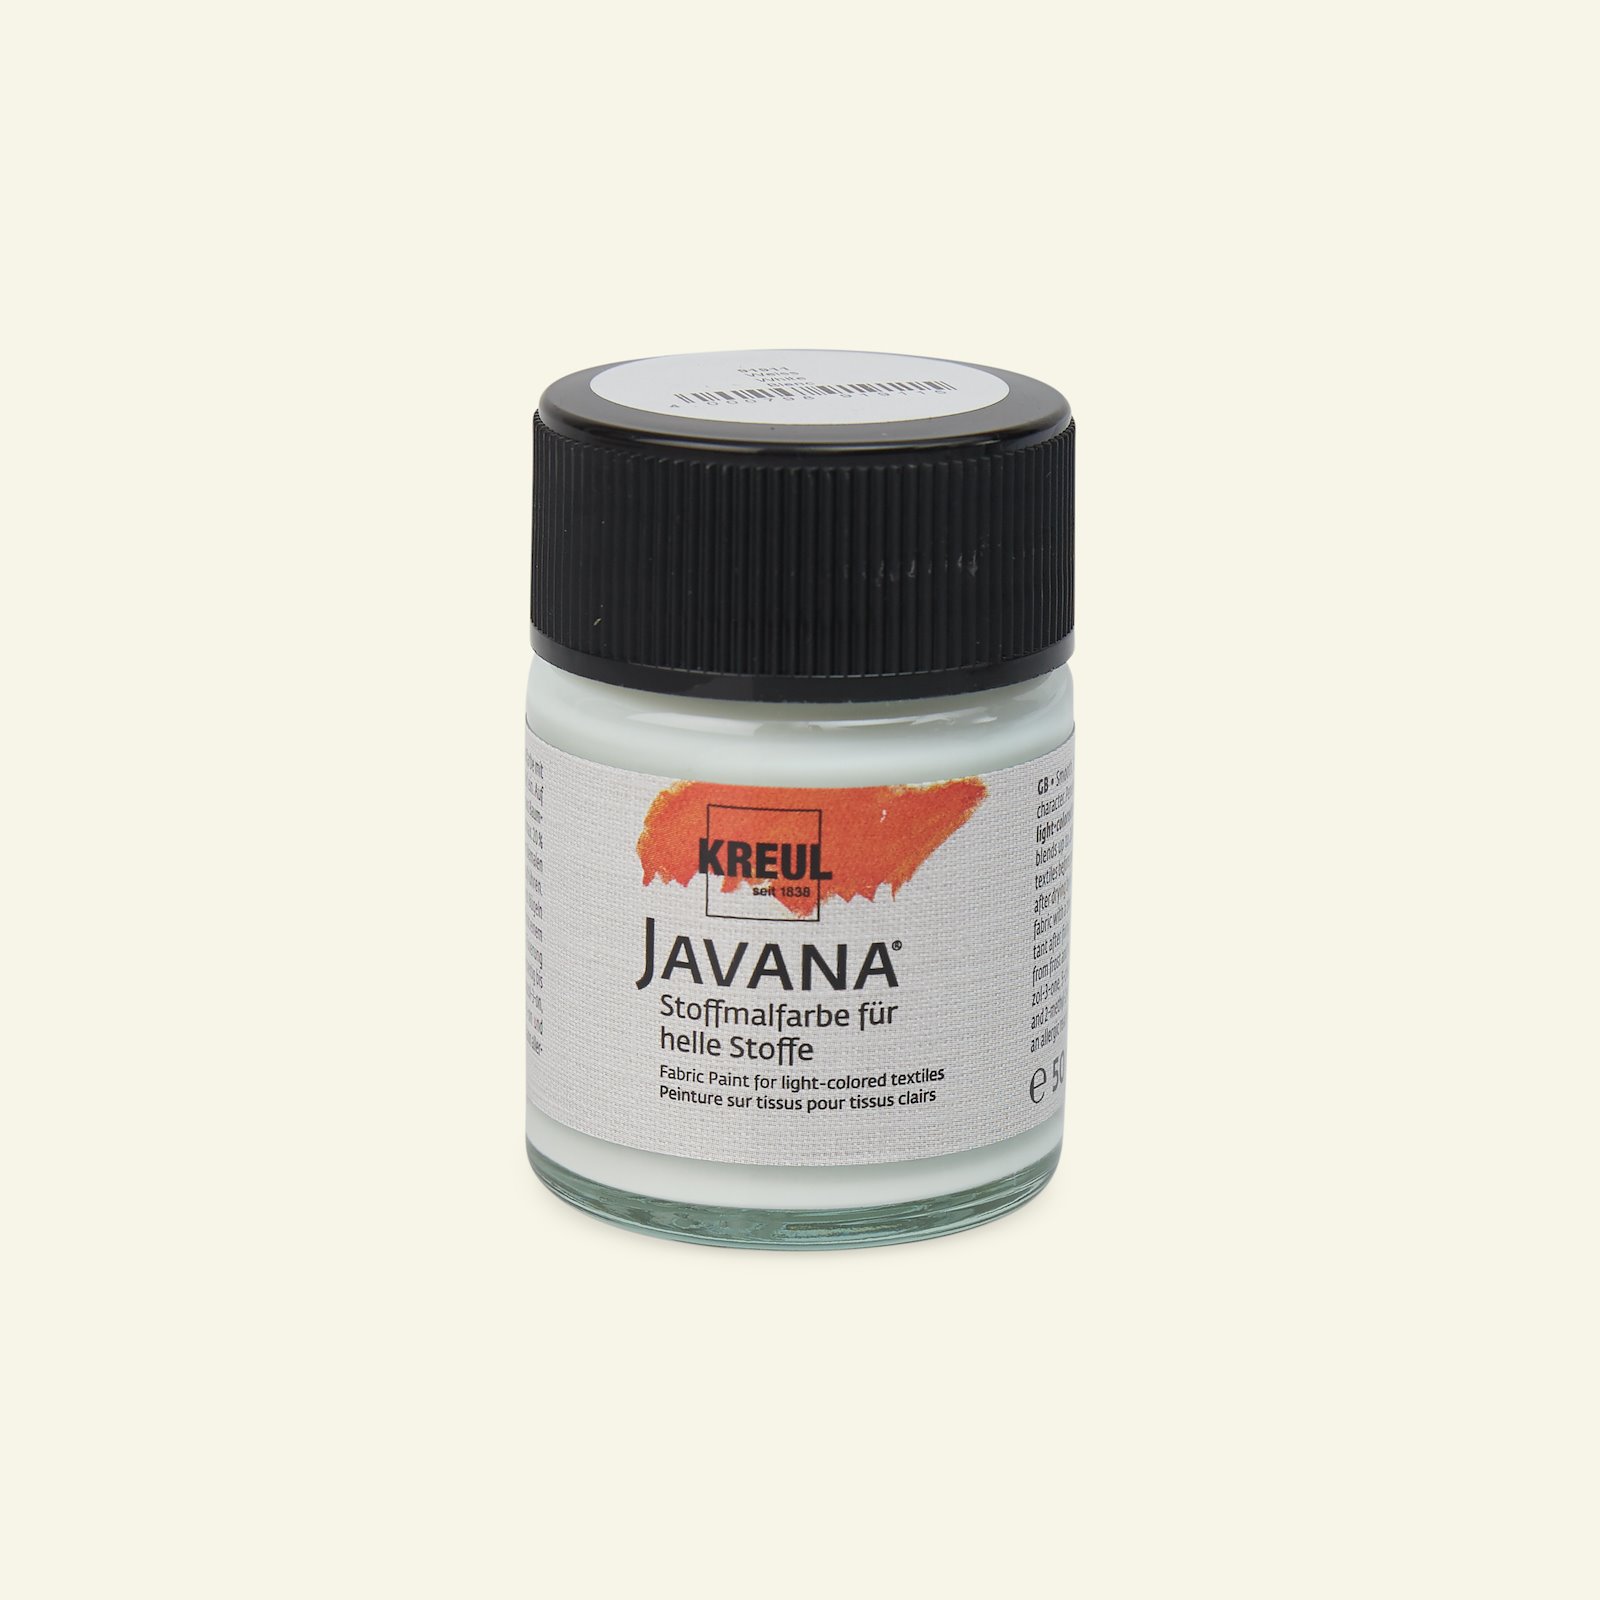 Javana tekstilfarge, hvit, 50ml 29600_pack_b